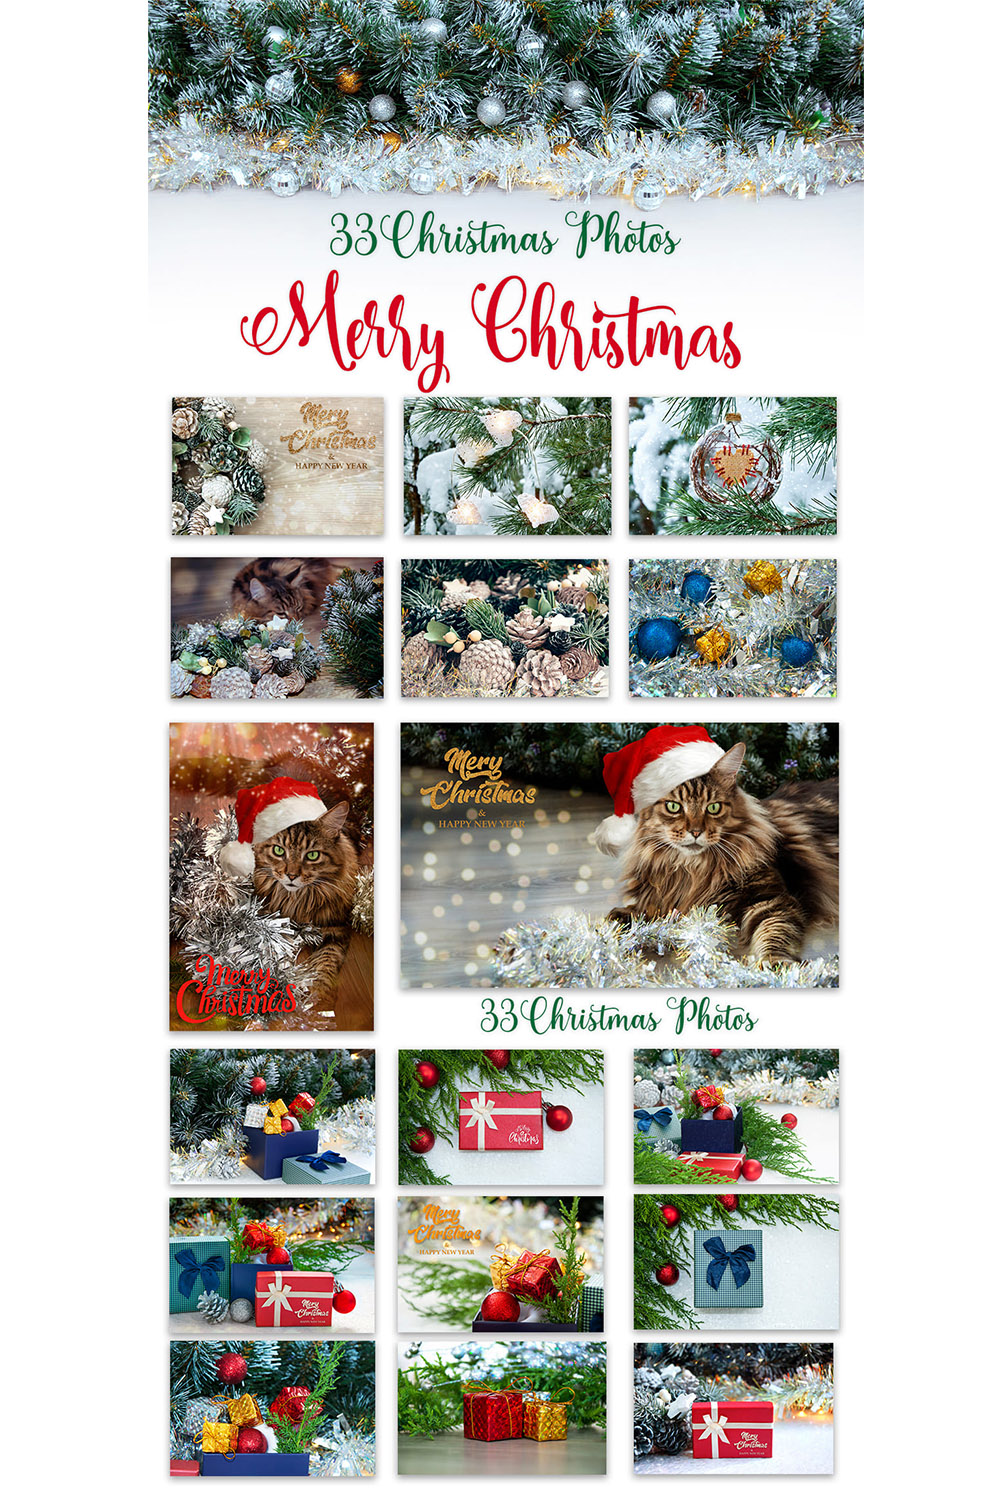 Christmas Photos and Backgrounds Set pinterest image.